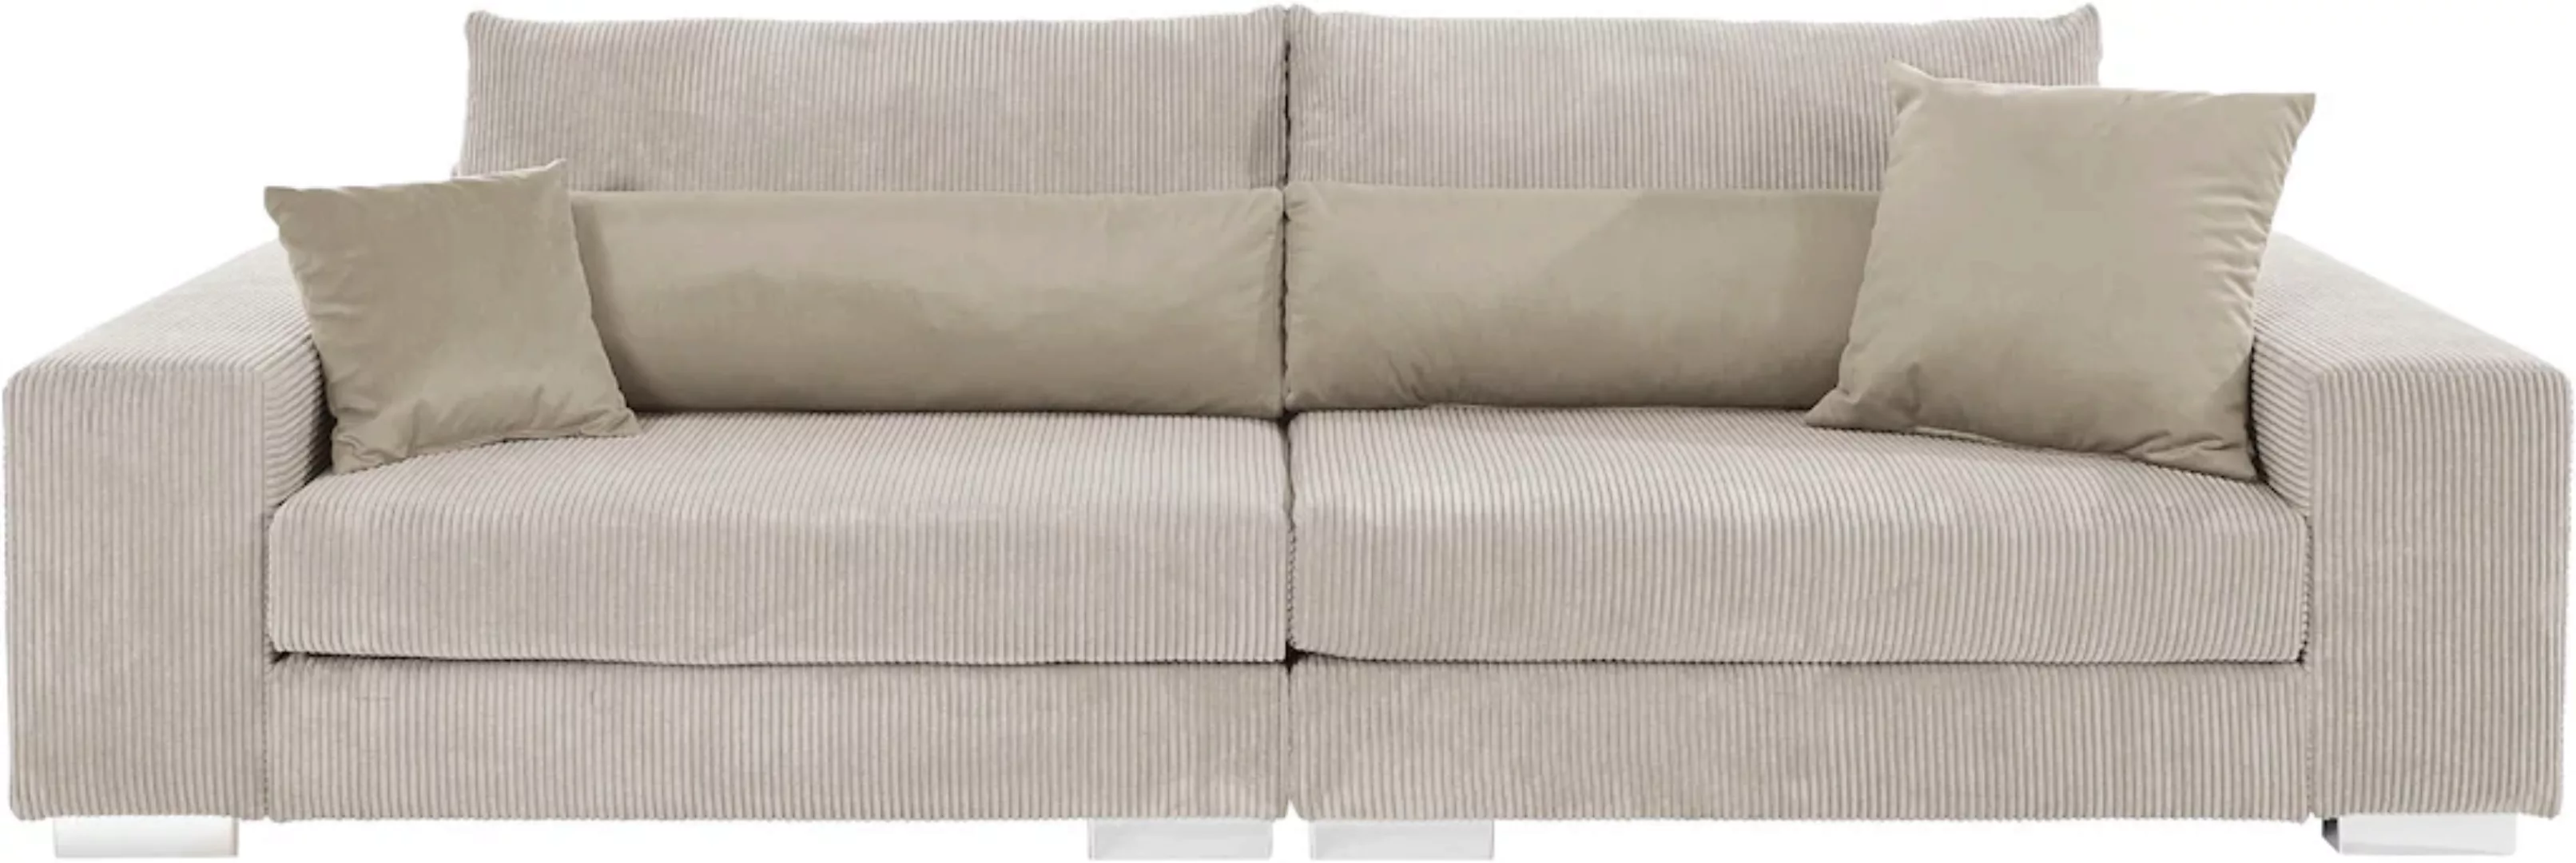 Home affaire Big-Sofa "Vasco", Breite 277 cm, inkl. 6-teiliges Kissenset, i günstig online kaufen